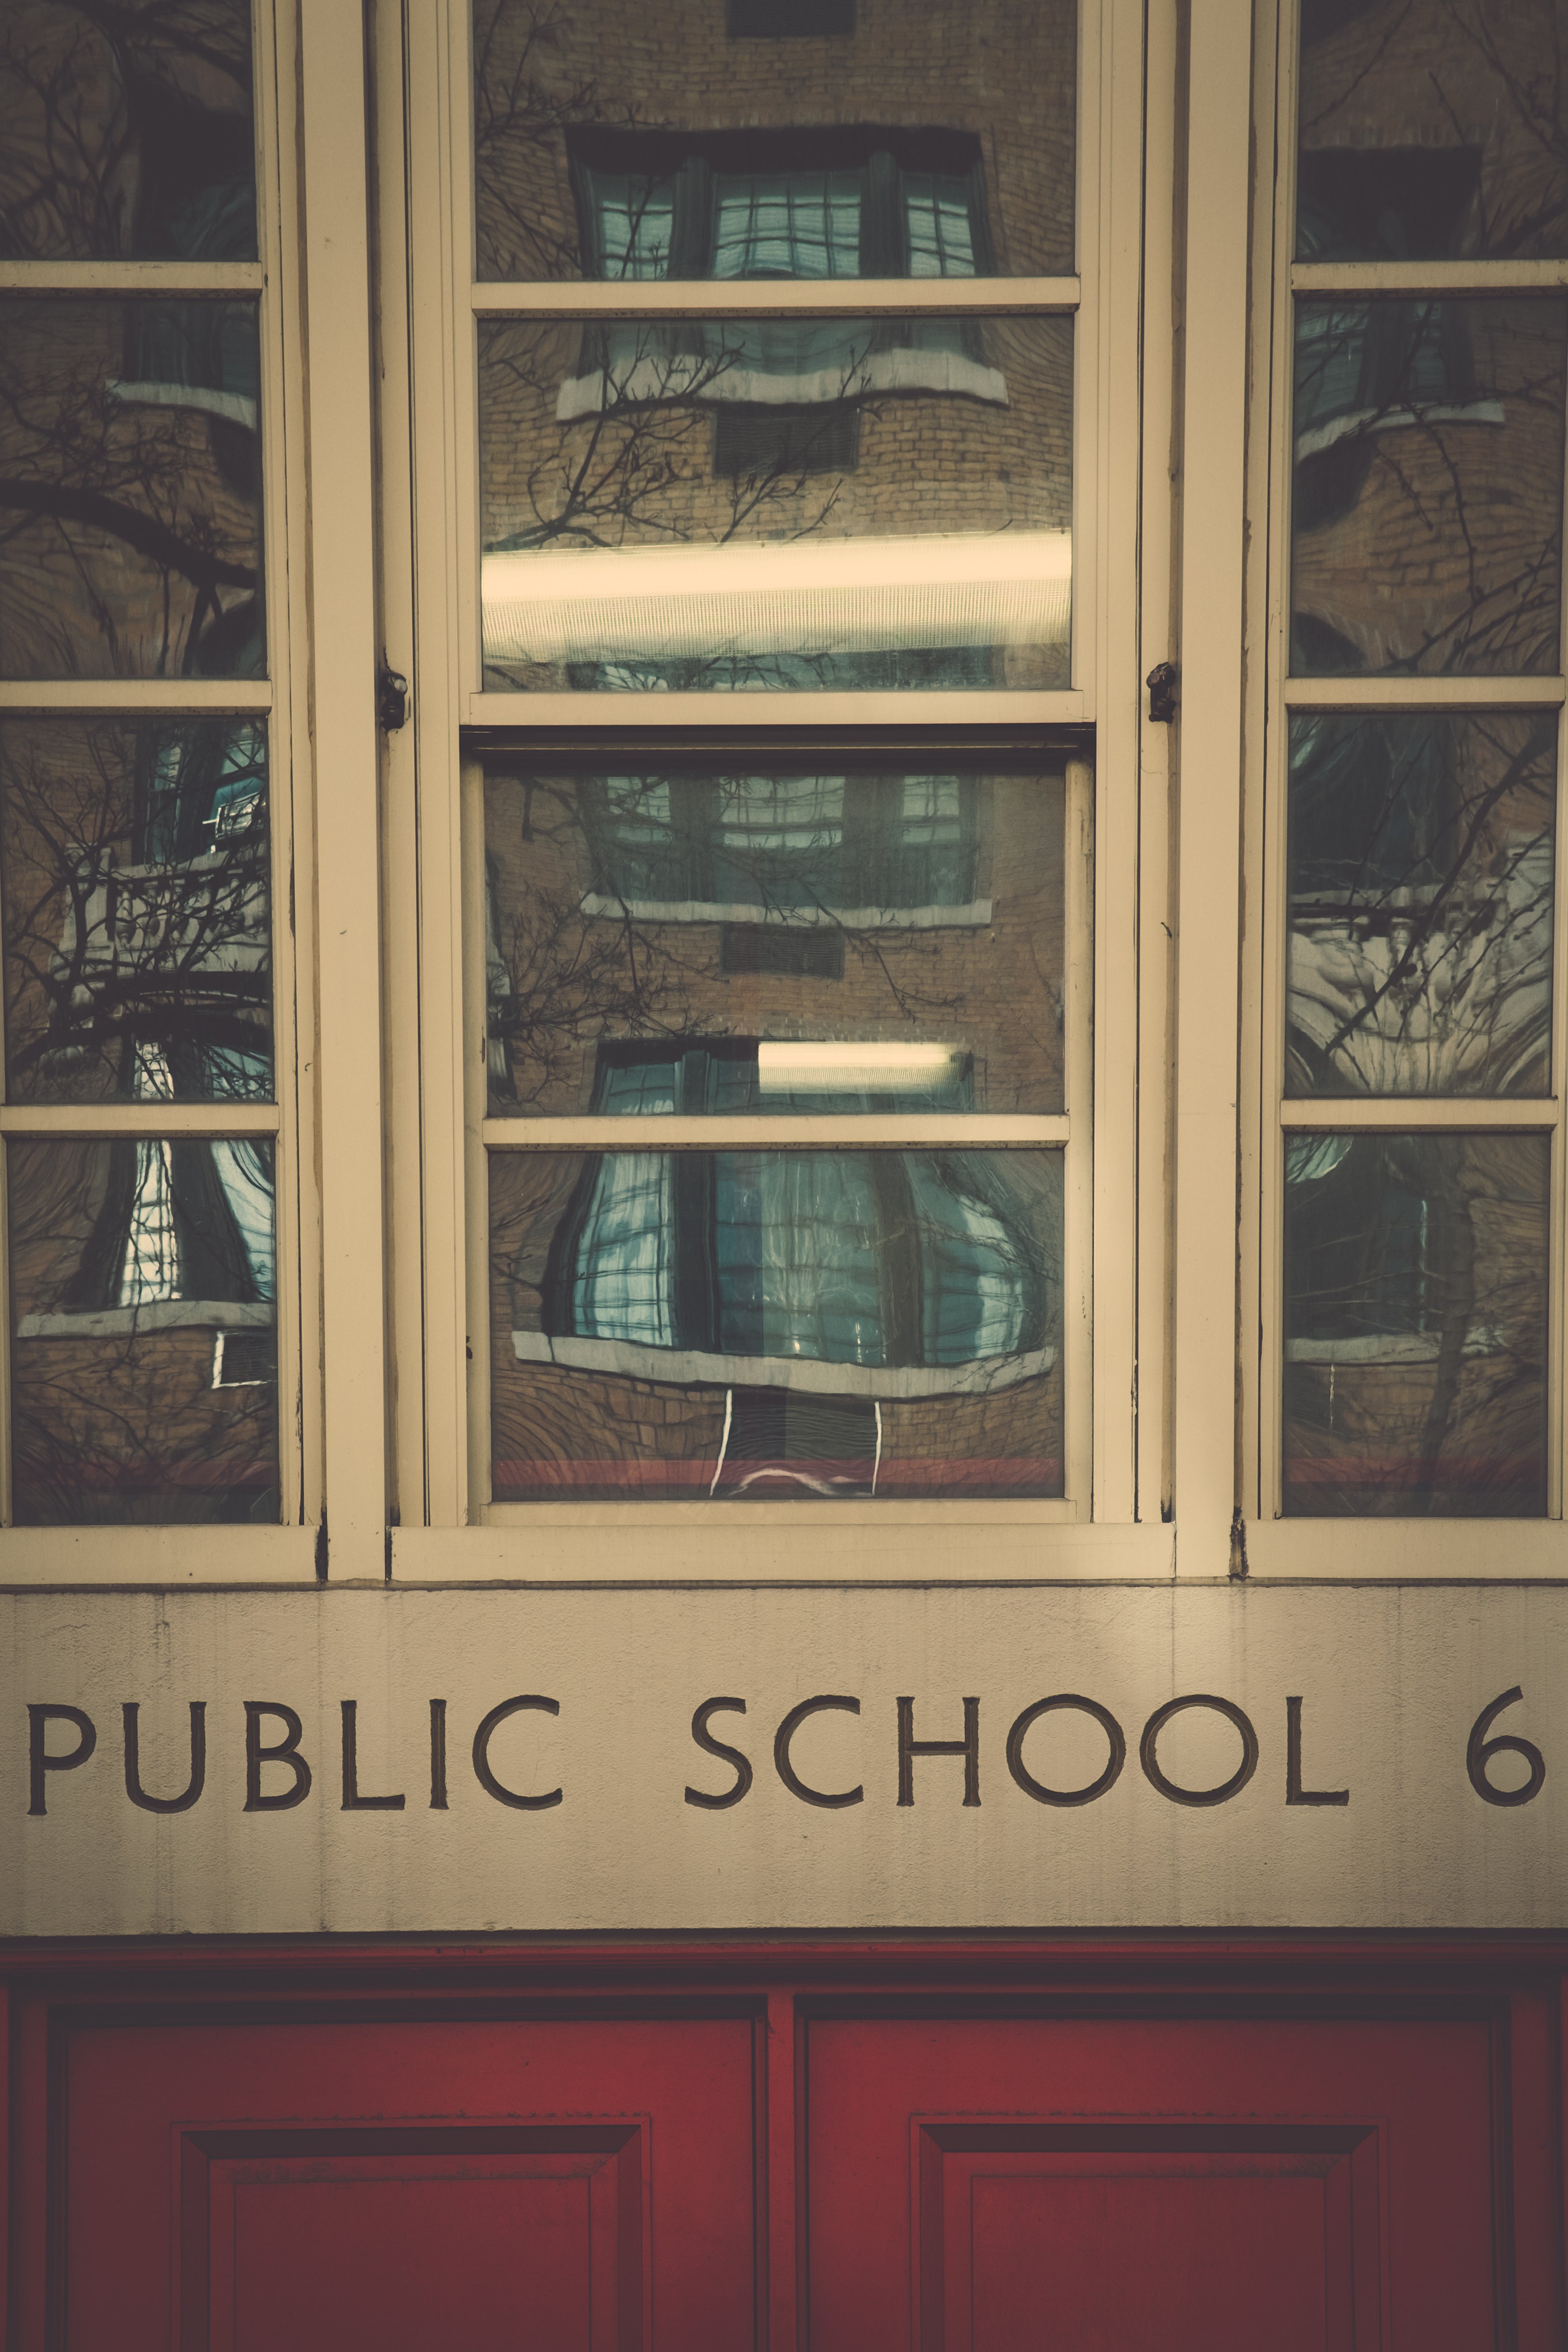 Public School 6 - Notice the Space